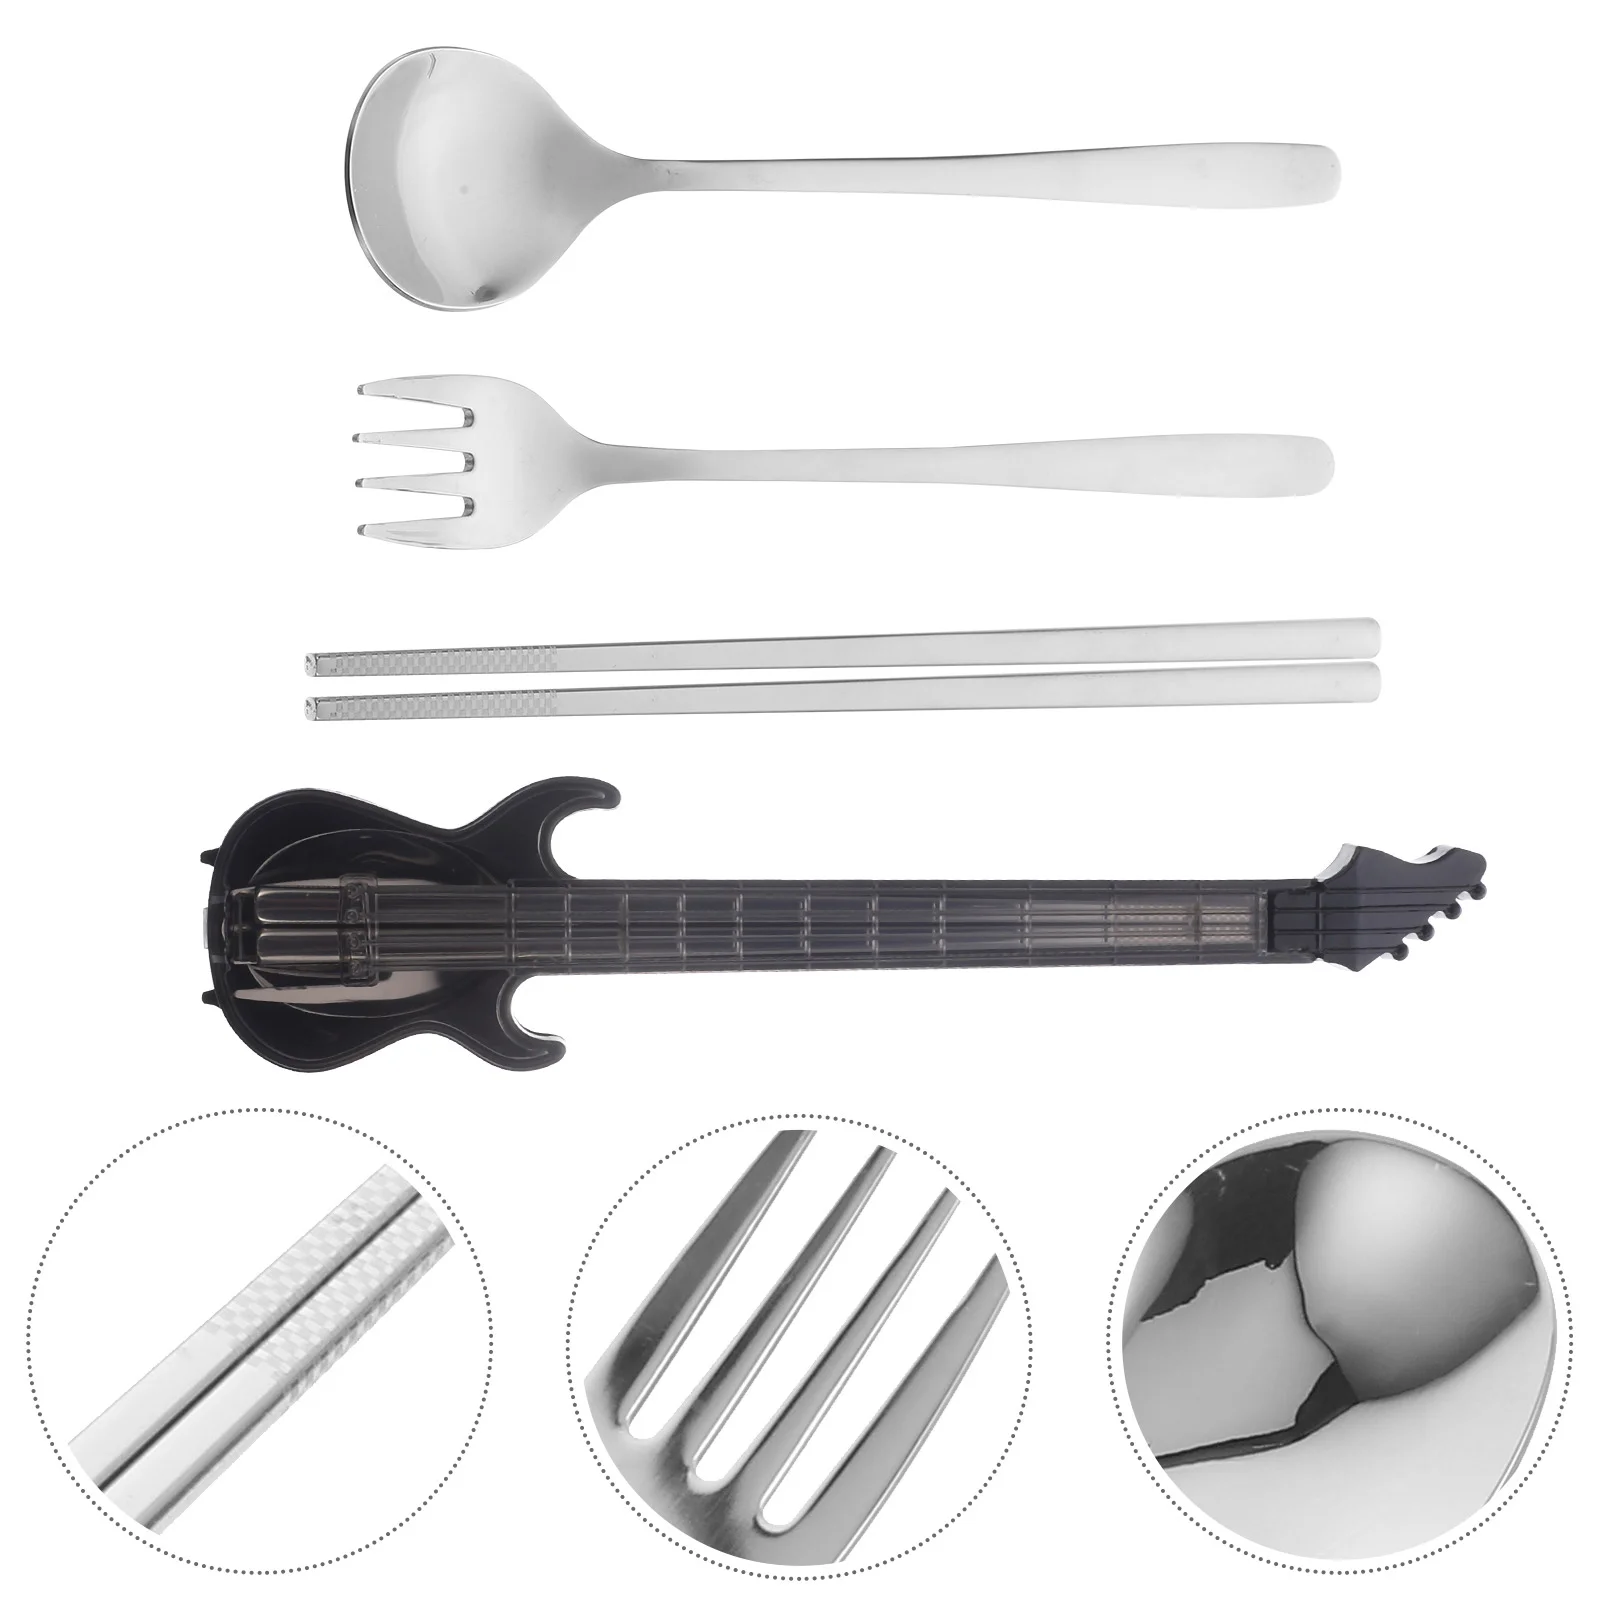 

Guitars Silverware Case Portable Utensils Reusable Lunch Wooden Forks Spoons Travel Stainless Steel Chopsticks